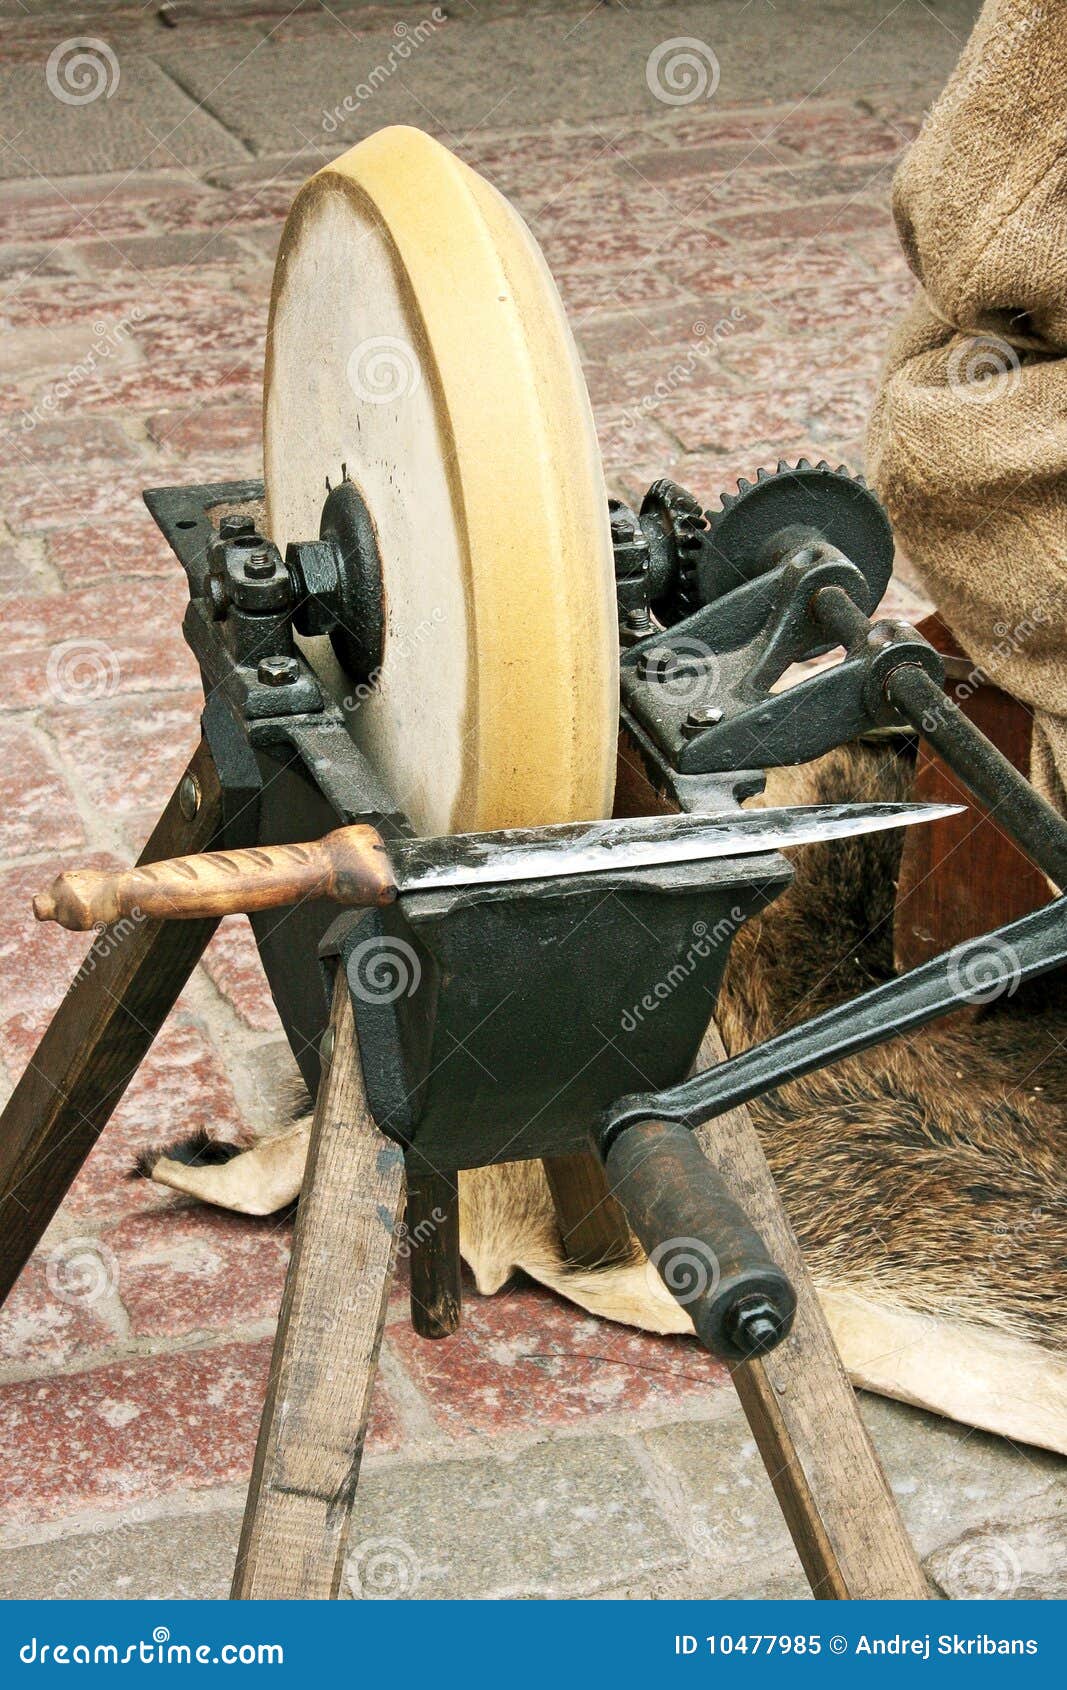 https://thumbs.dreamstime.com/z/sharpening-wheel-old-knife-10477985.jpg